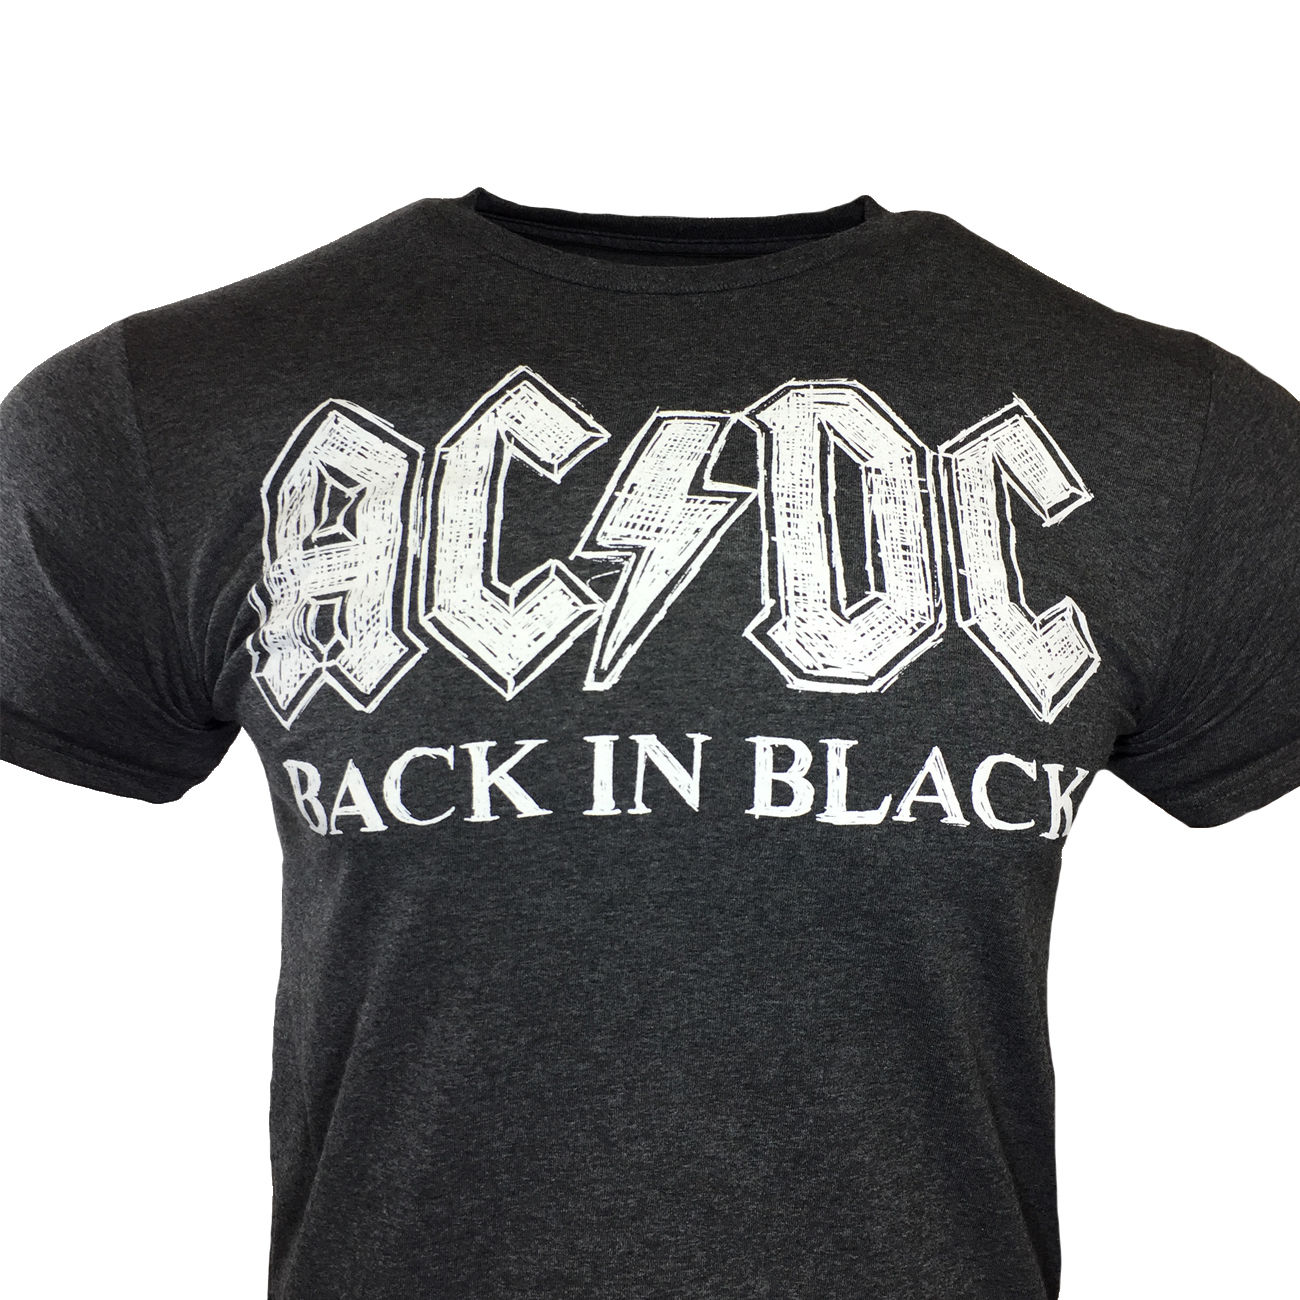 AC/DC Original Back in Black Concert Men's T-Shirt Rock n Roll Music